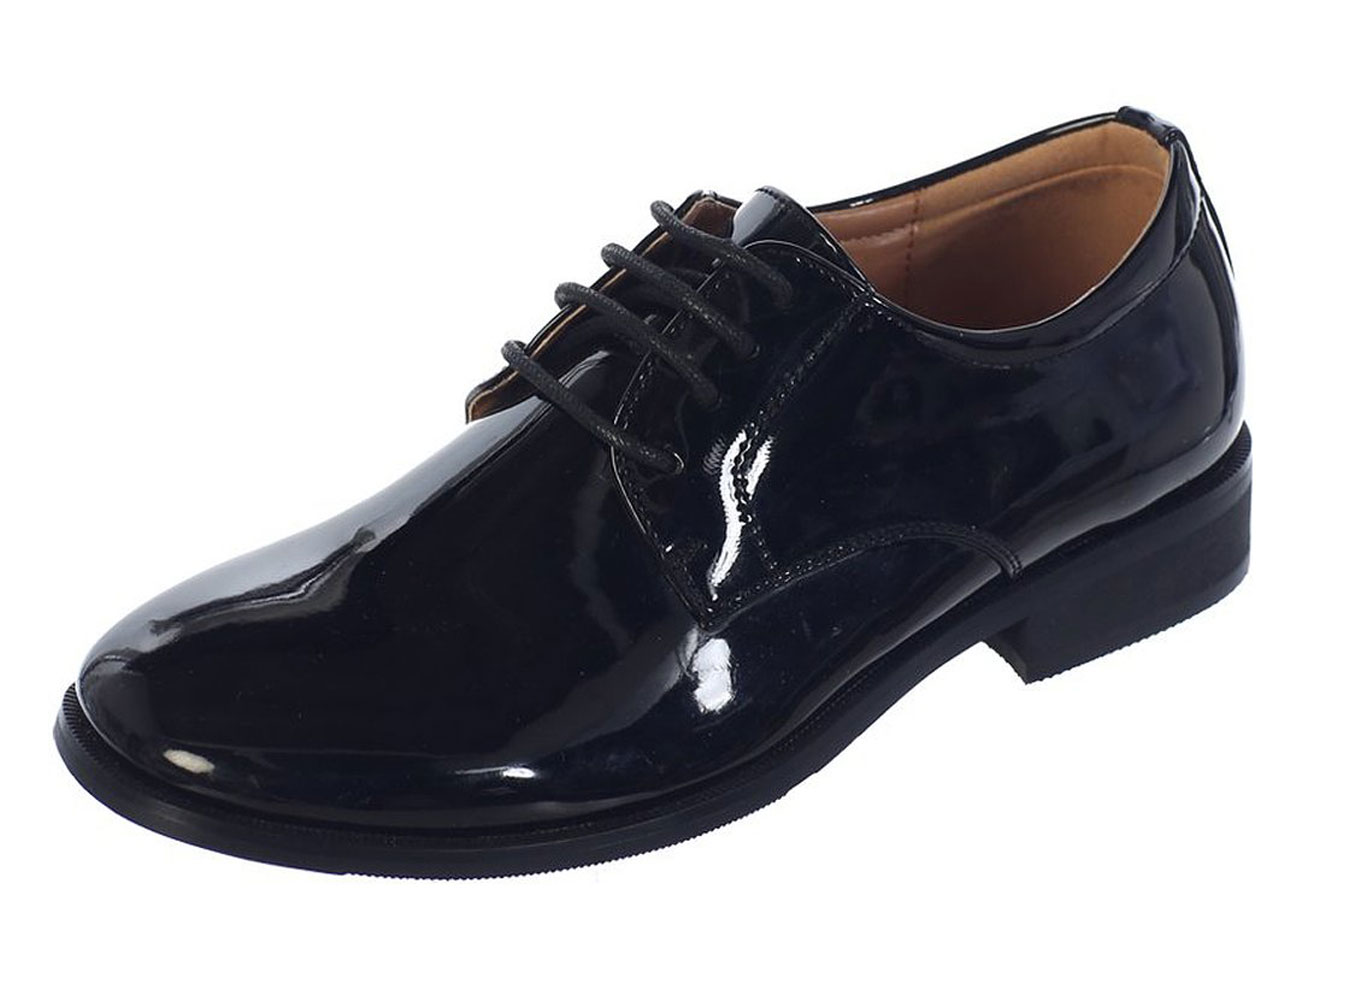 Avery Hill Boys Shiny or Shiny Patent Leather Shoes Bk Shiny Littlekid 12